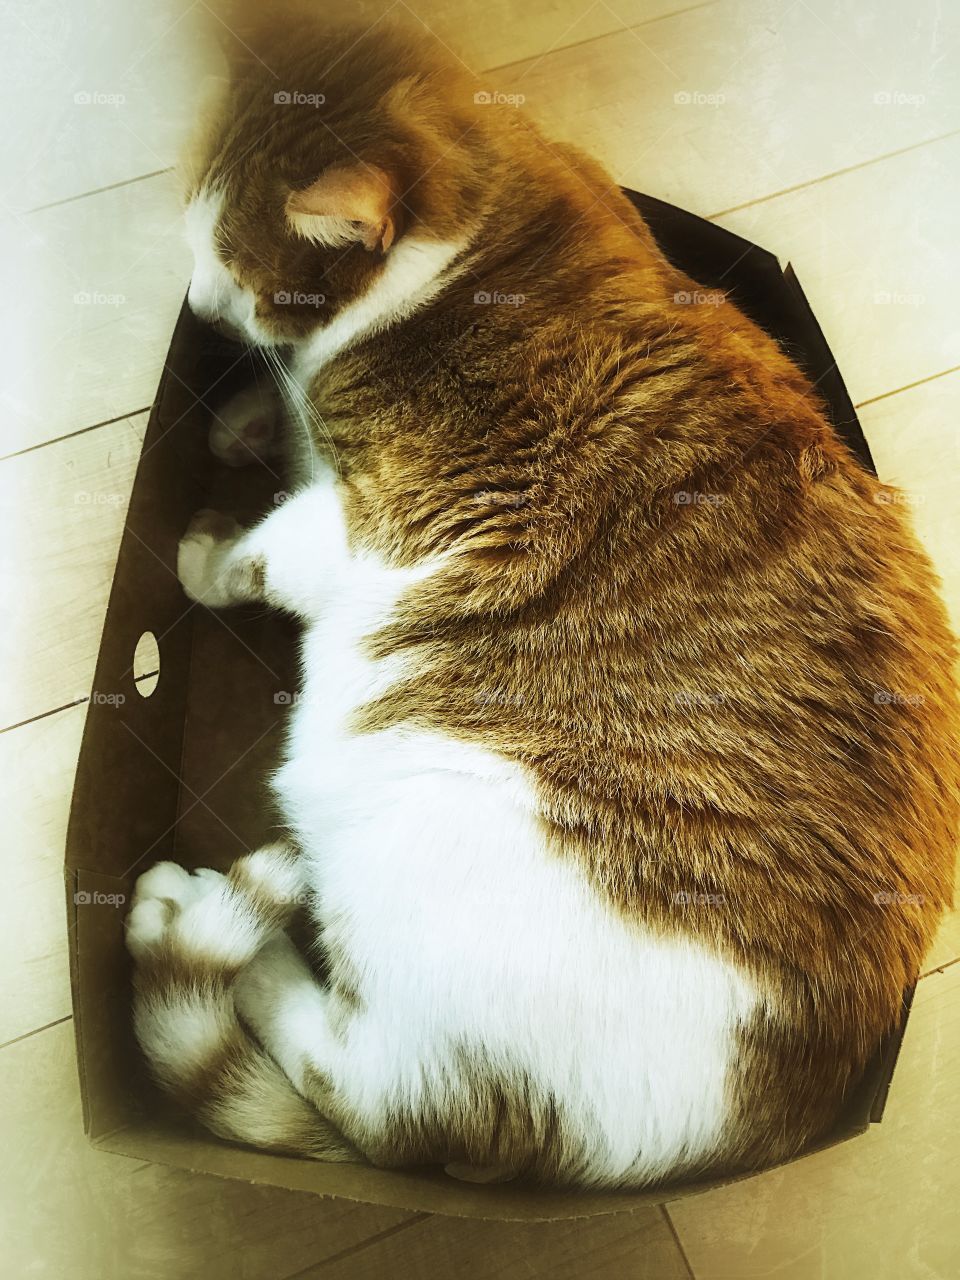 Overweight cat in cardboard box lid